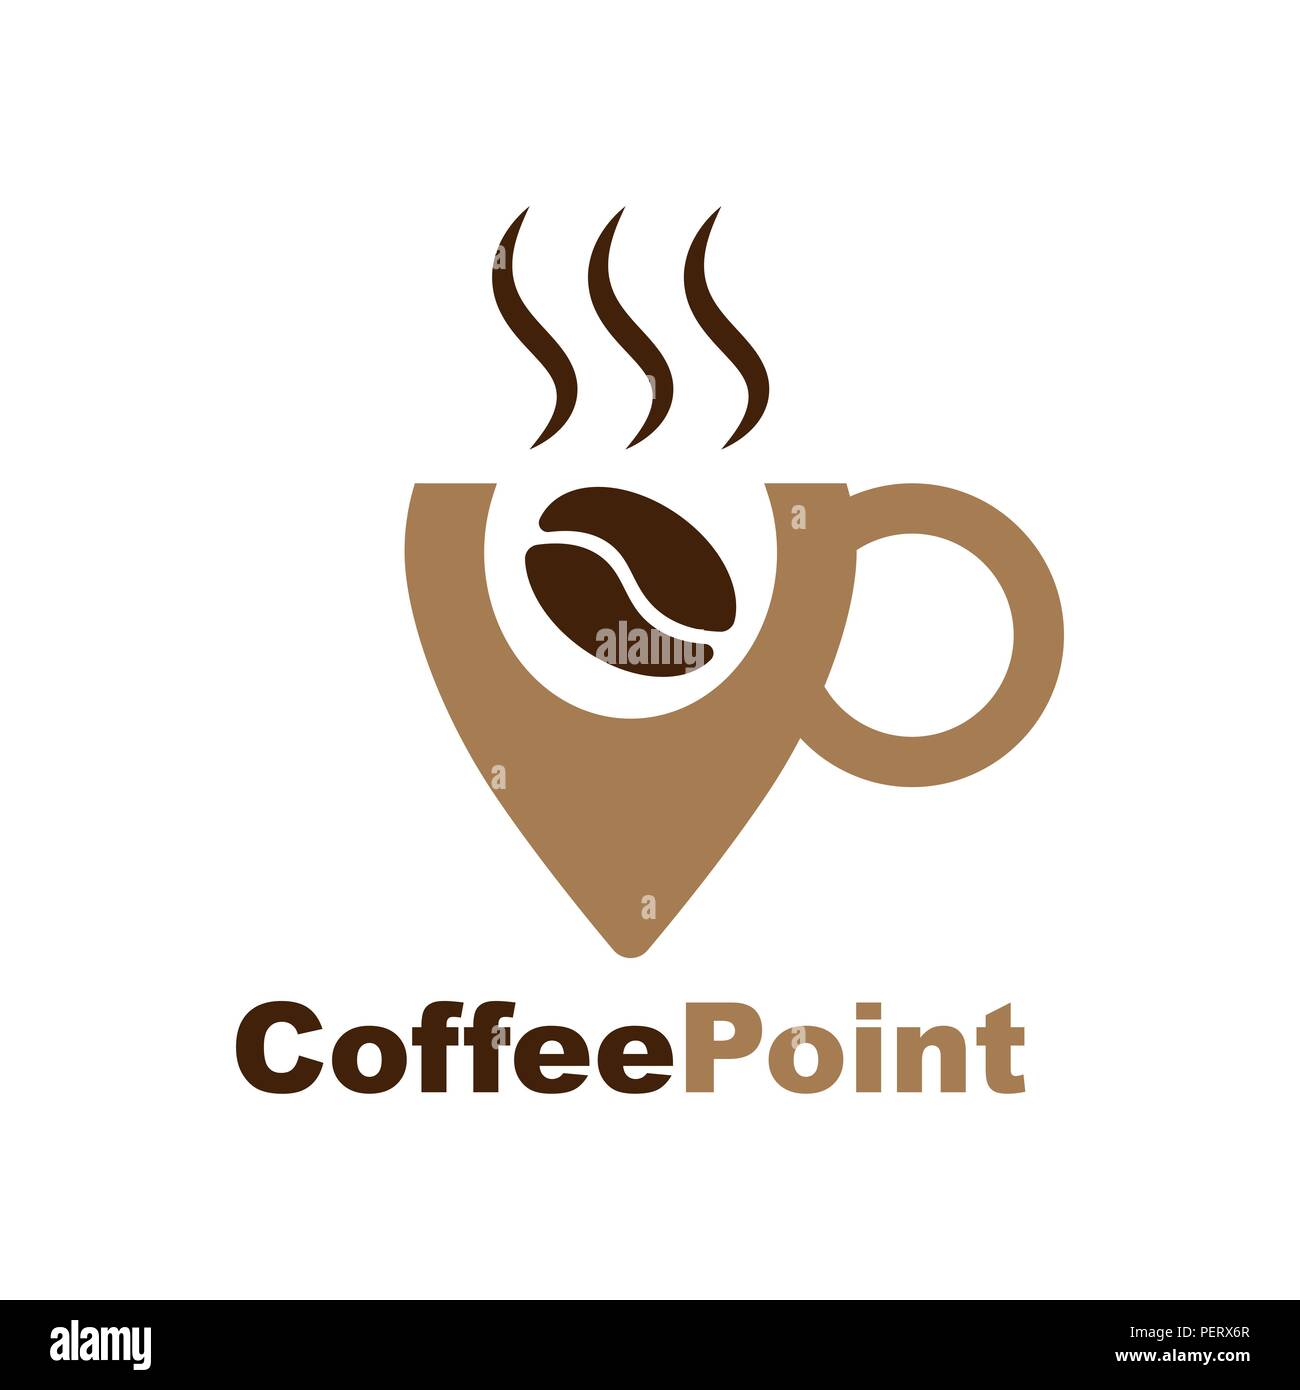 Logo für Coffee Shop. Umrisse Schriftzug mit Coffee Bean, Kappe und Navigation. Kaffee punkt Logo Designs. Kaffee Ort logo template Designs vector Illustrator Stock Vektor